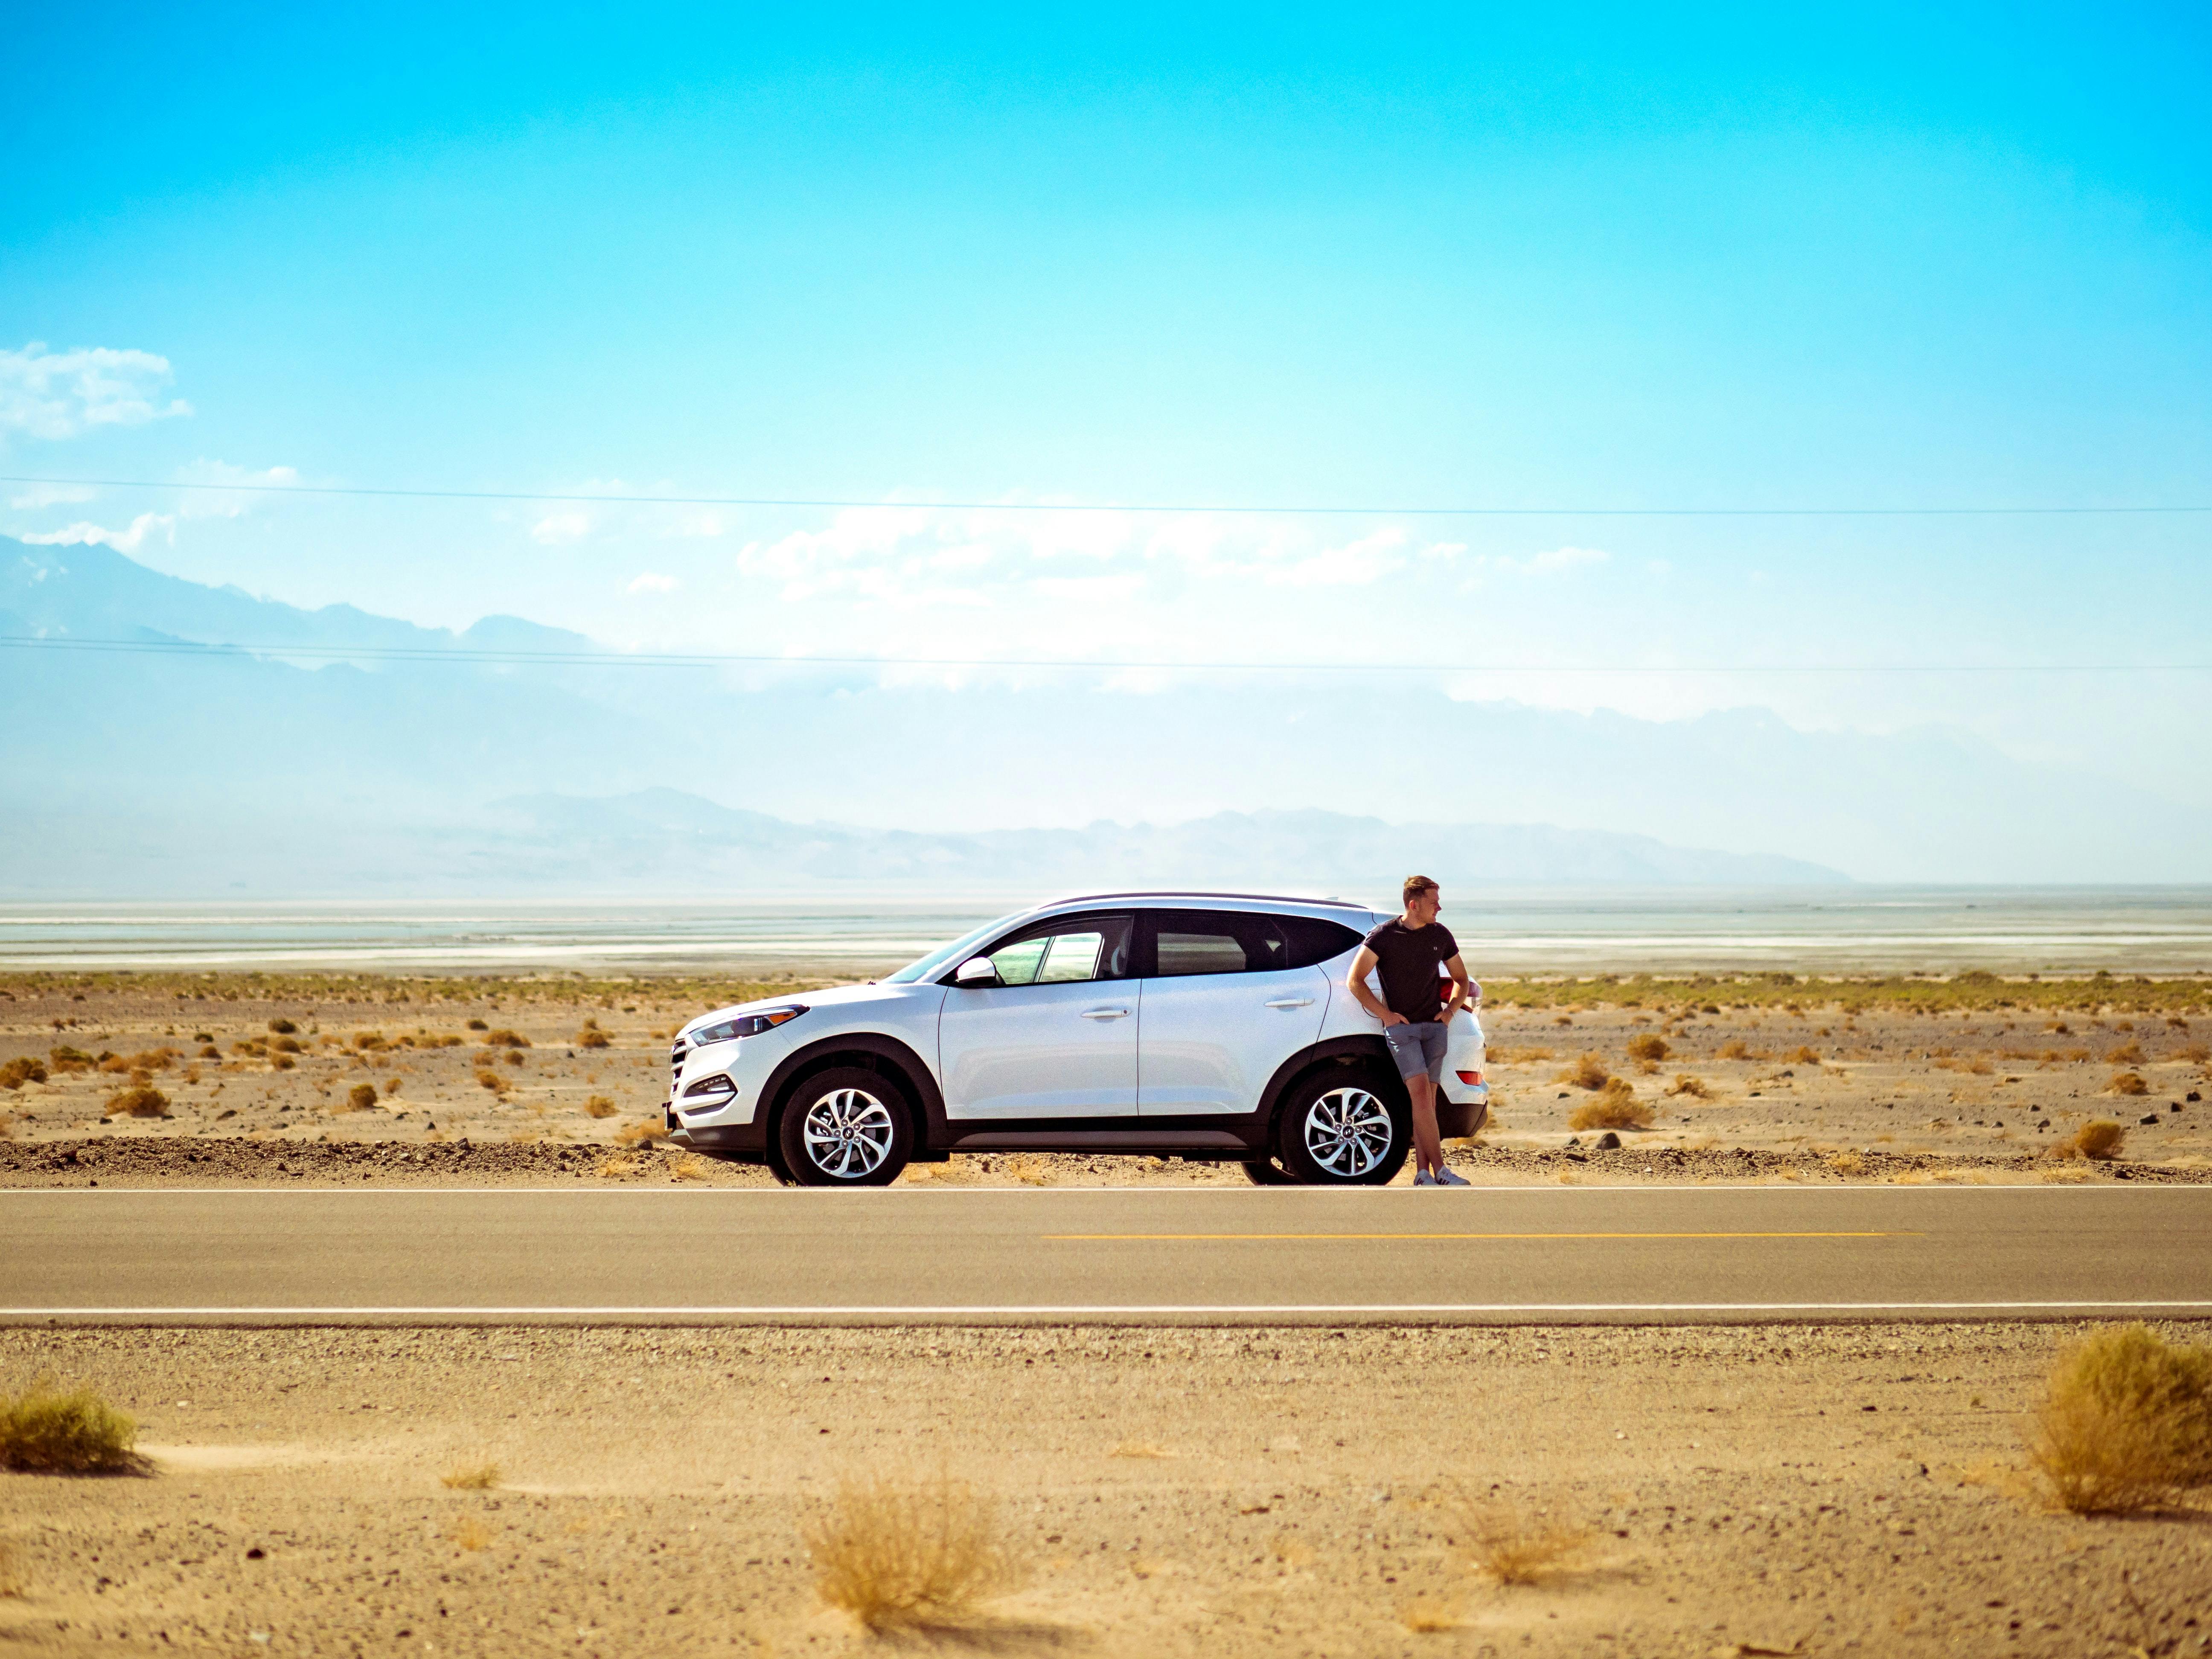 Man standing next to car in desert